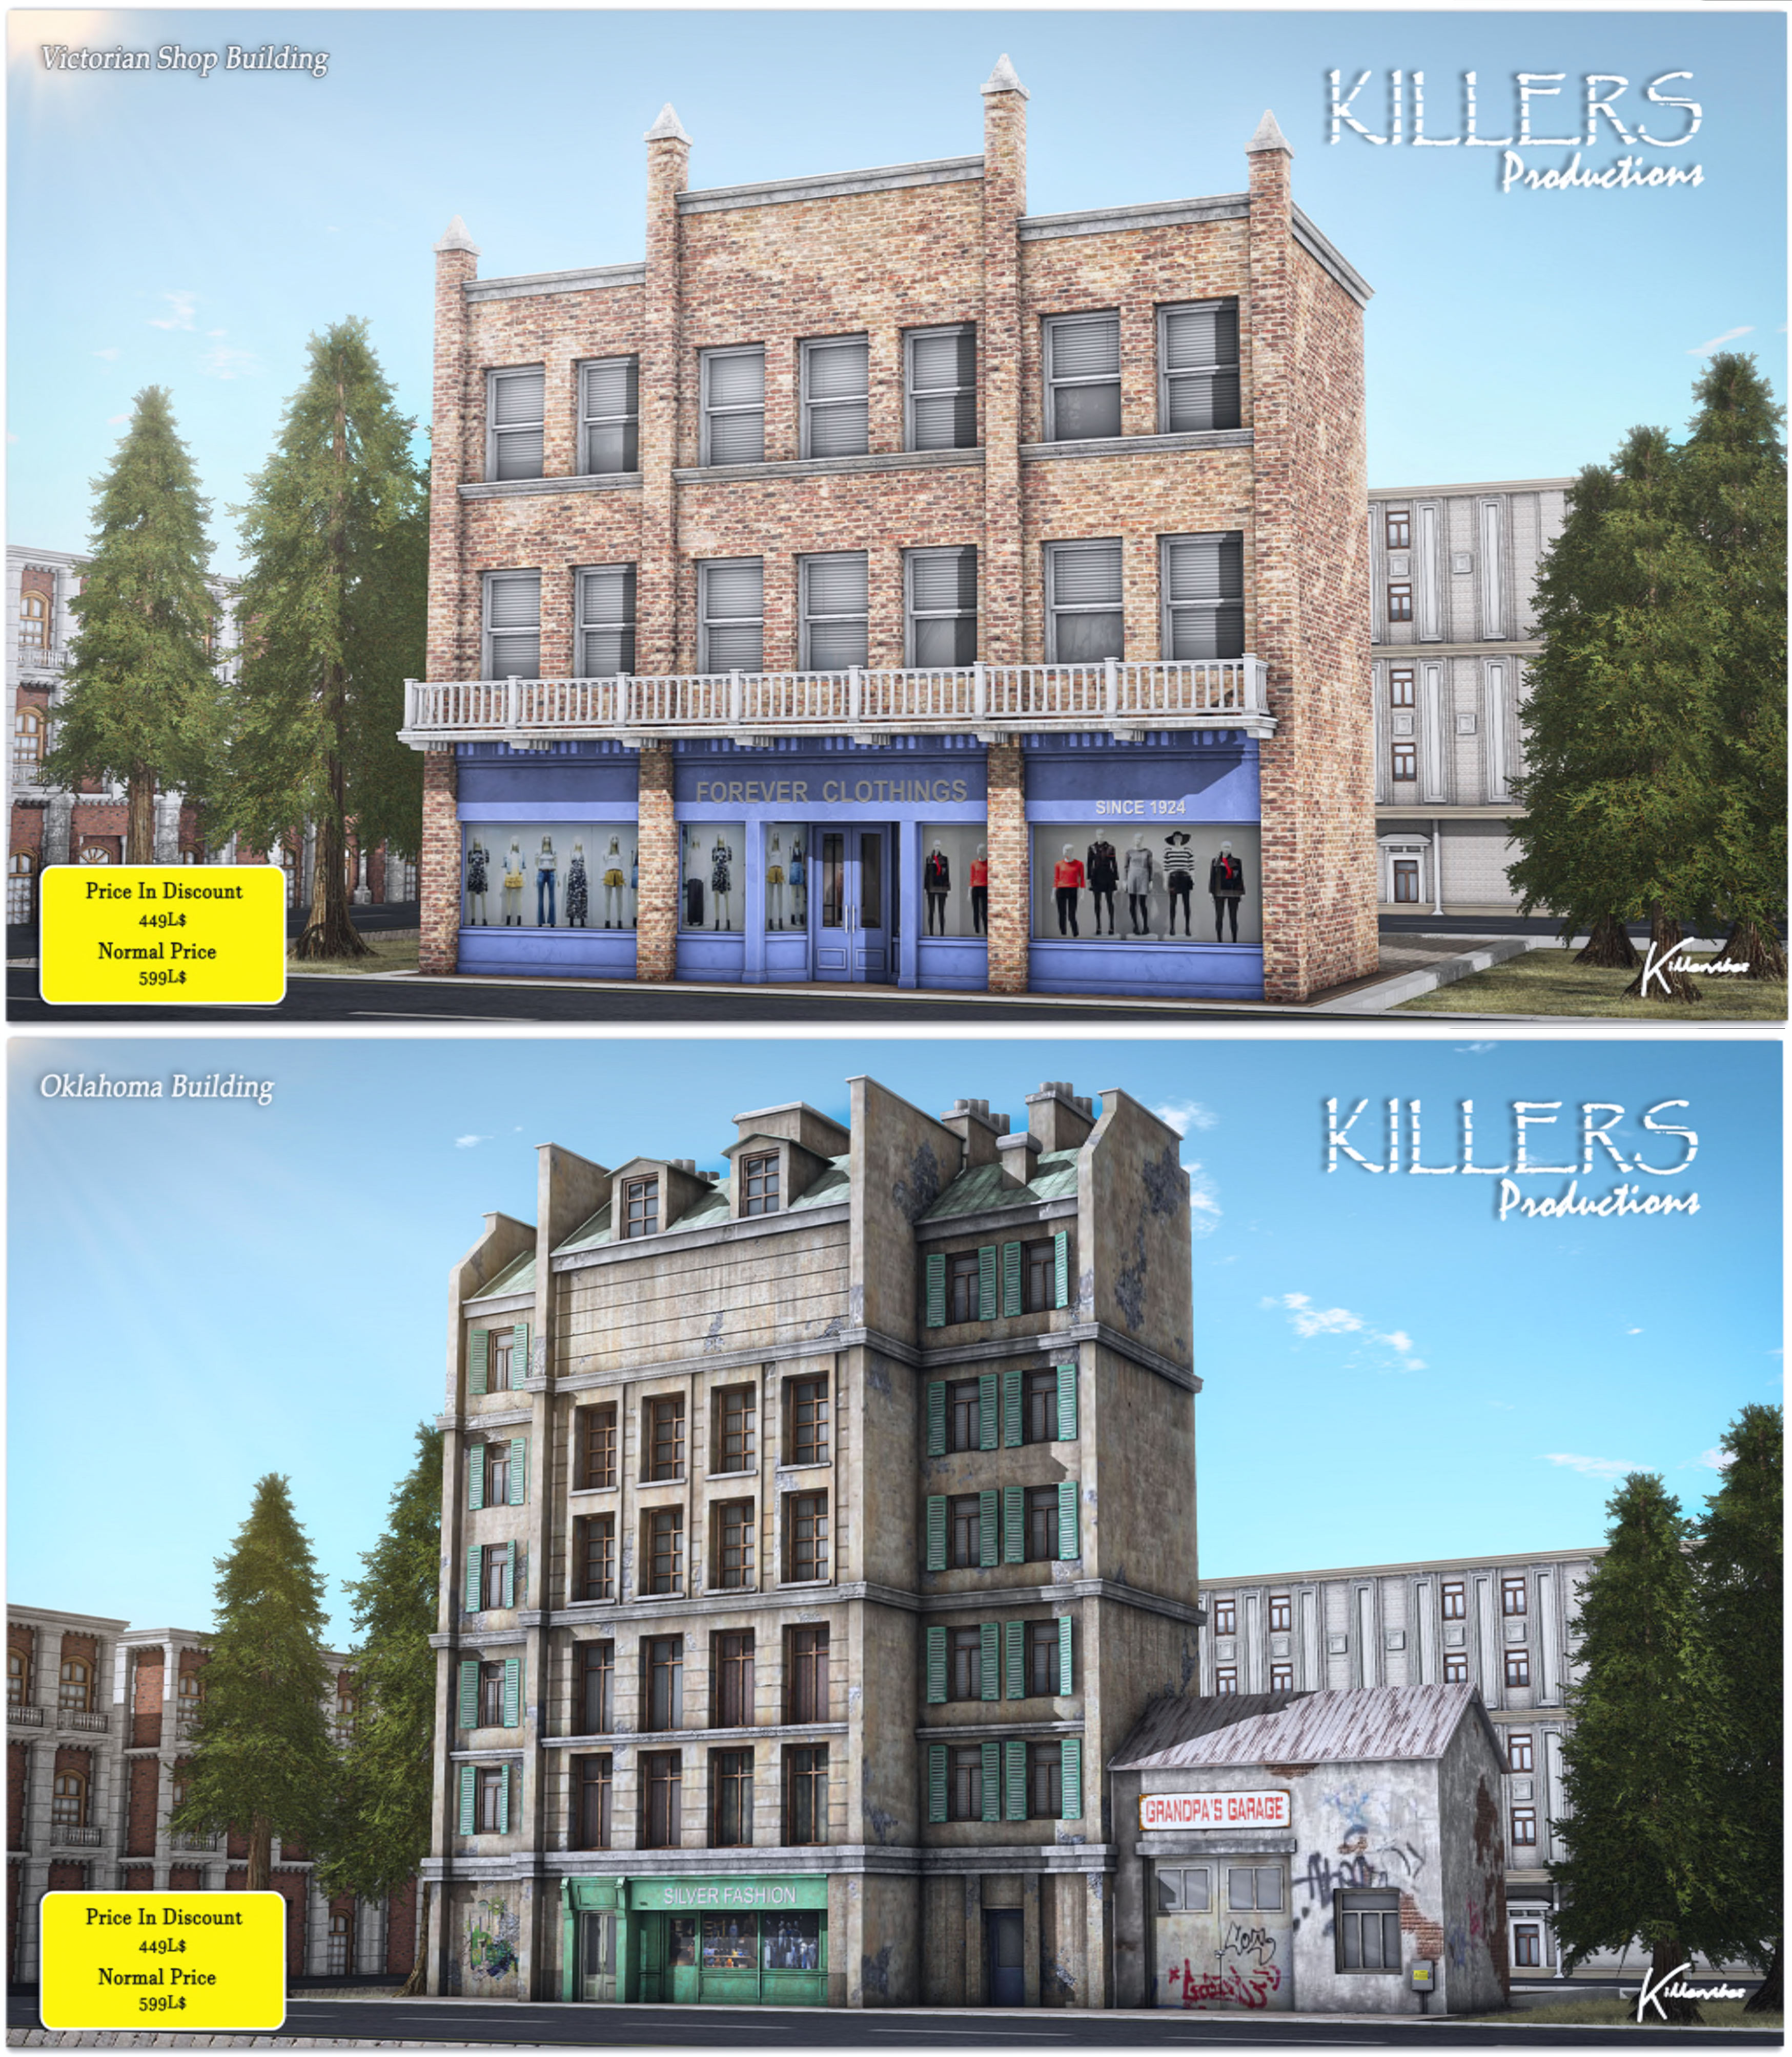 Killers Productions – Victorian Shop Building & Oklahoma Building